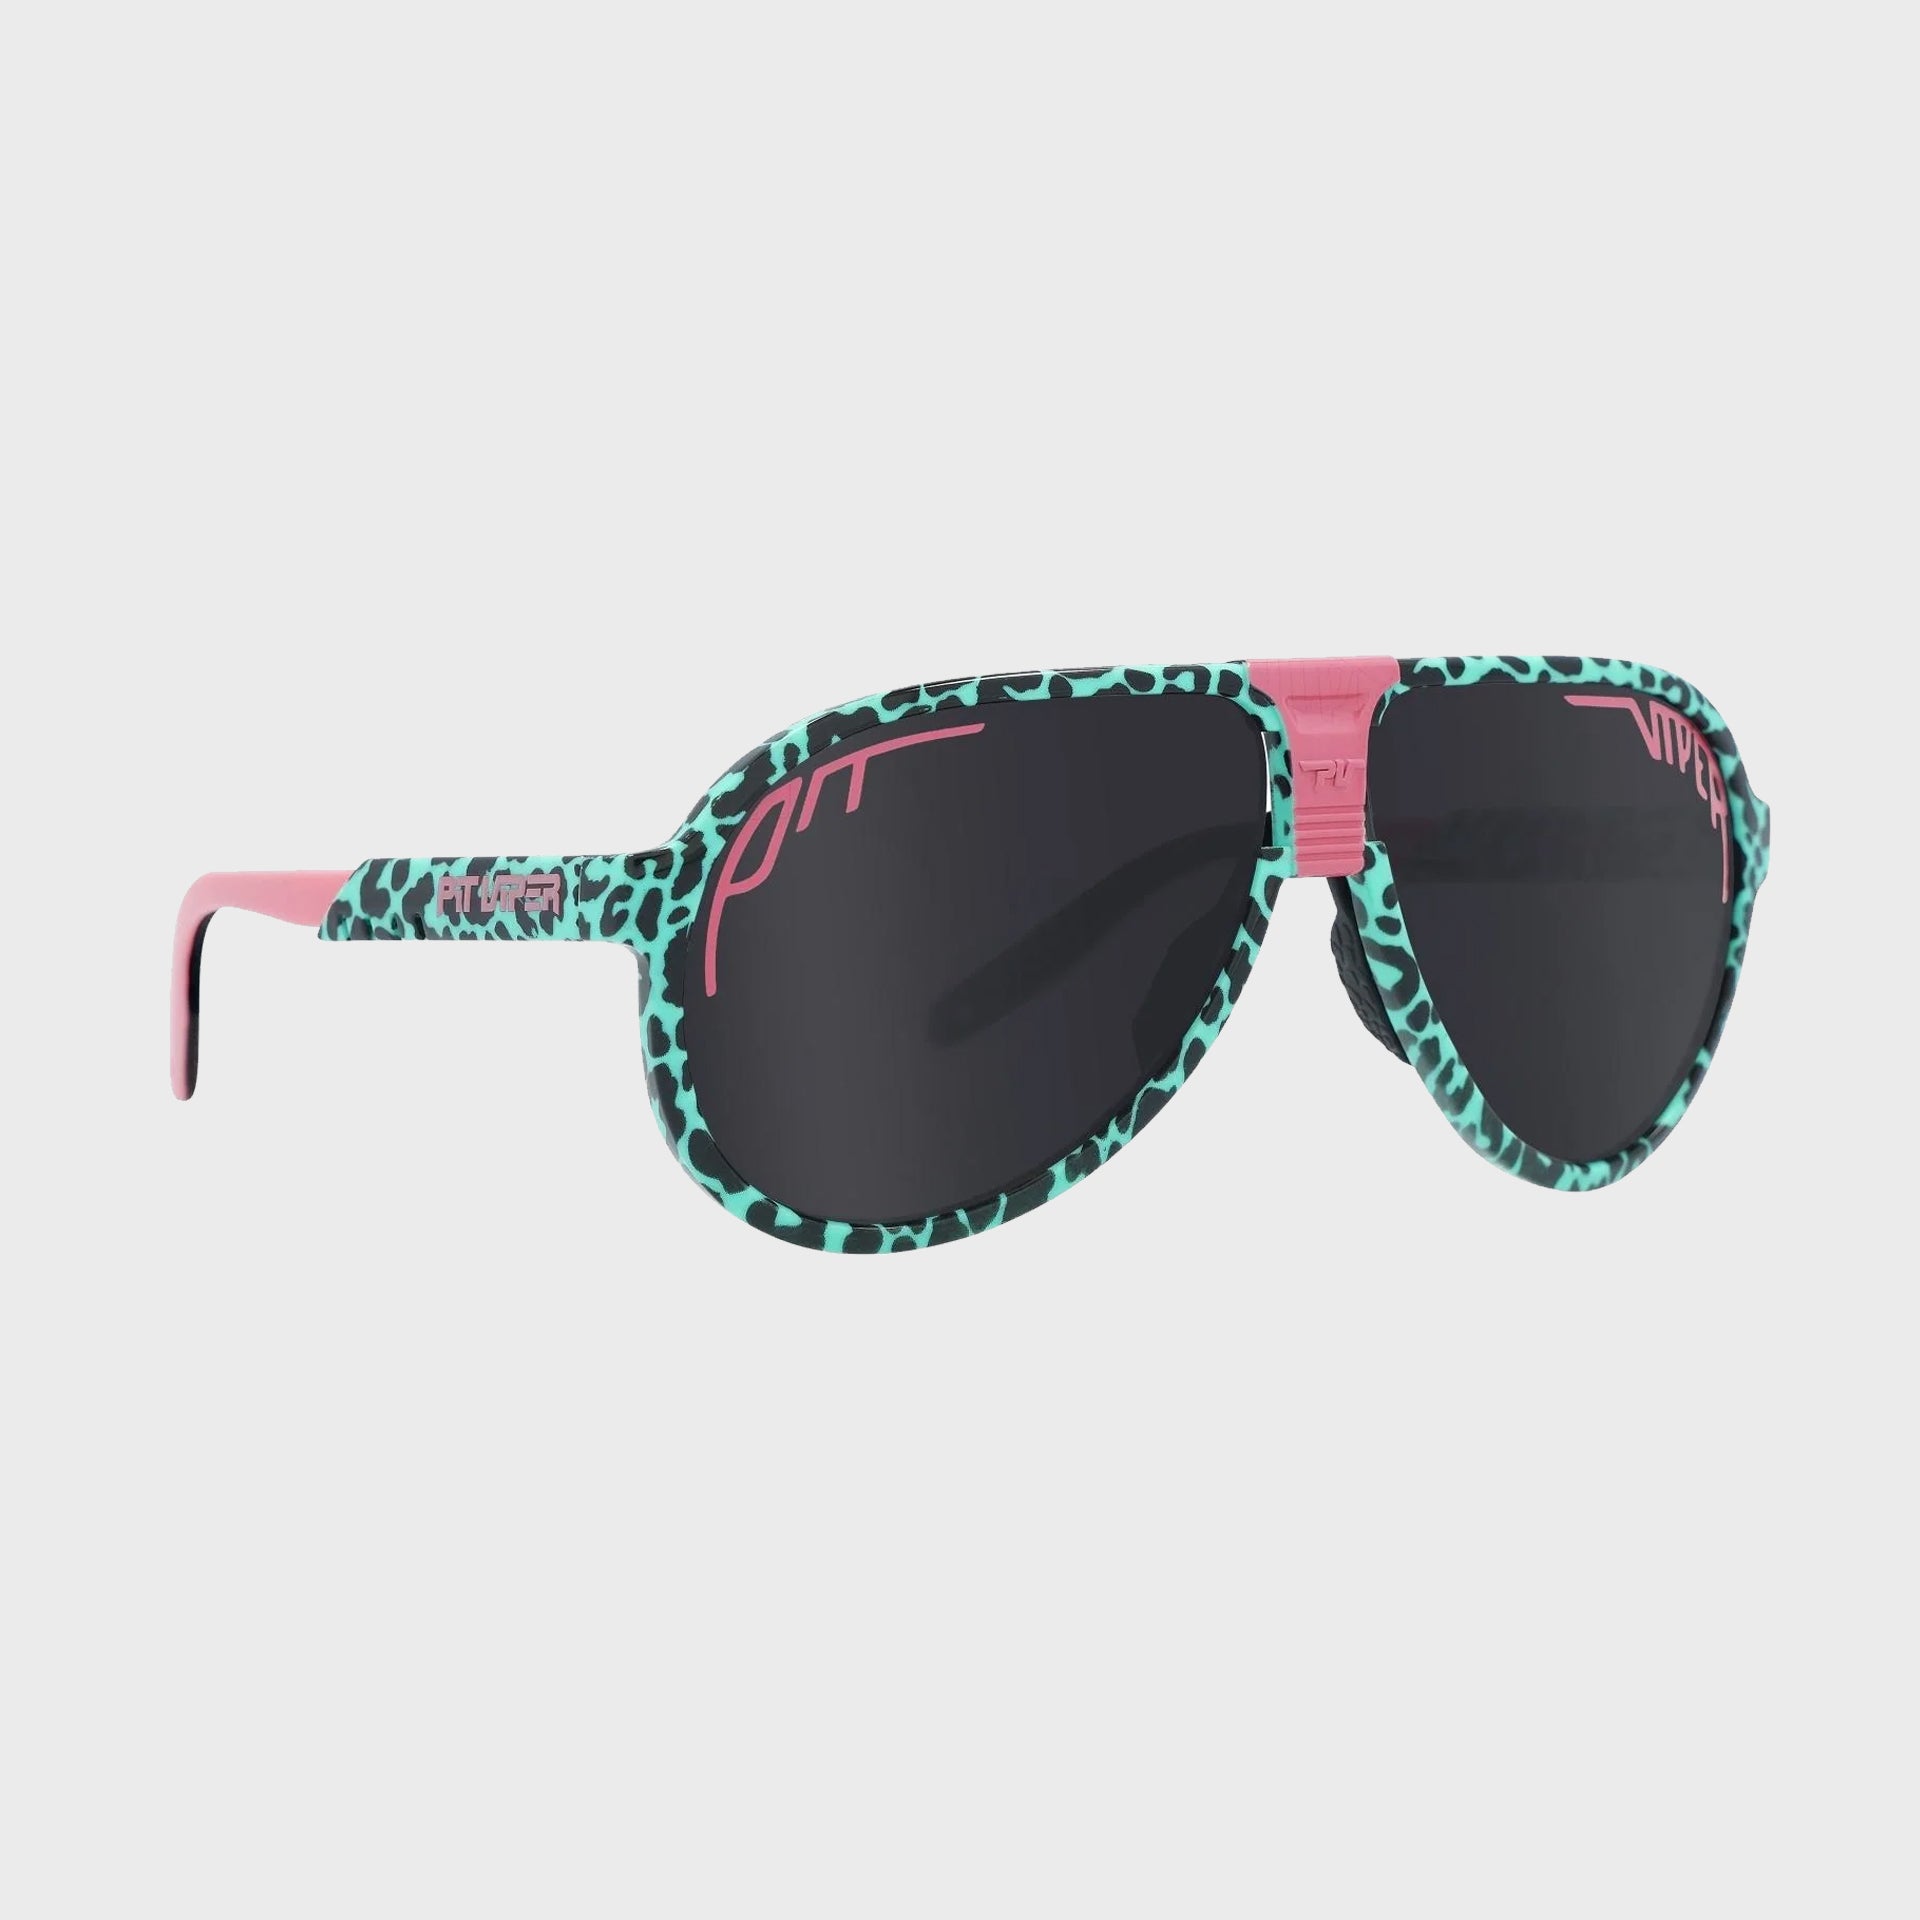 Pit Viper Jethawk - Marissa's Nails Polarized Sunglasses - ManGo Surfing